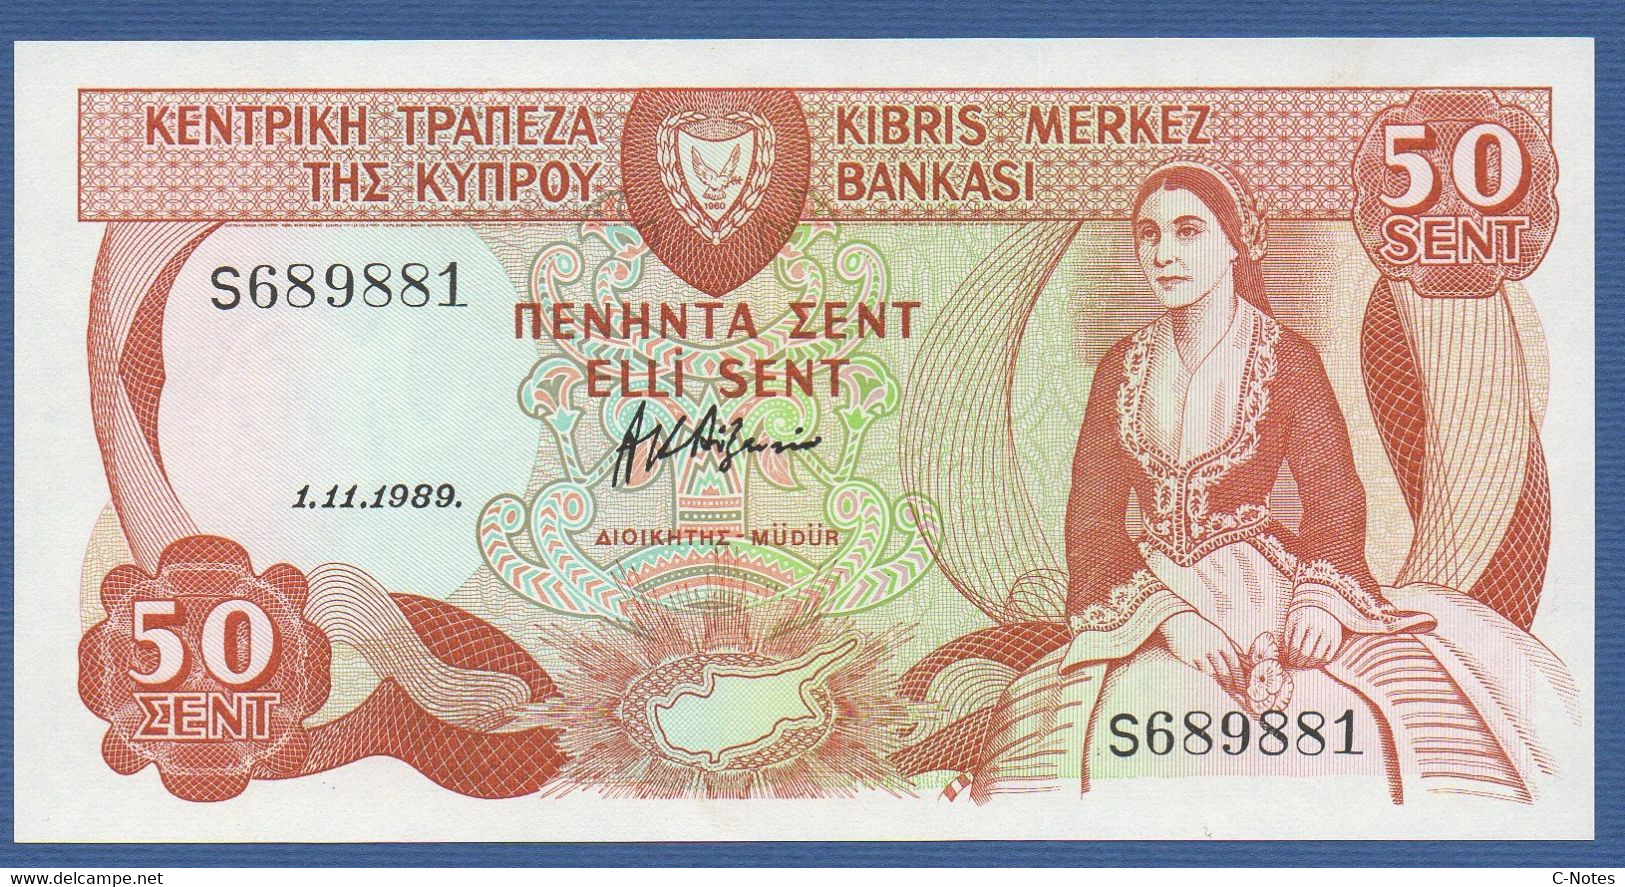 CYPRUS - P.52 (3) – 50 Cents / Sent 01.11.1989 UNC Serie S 689881 - Zypern